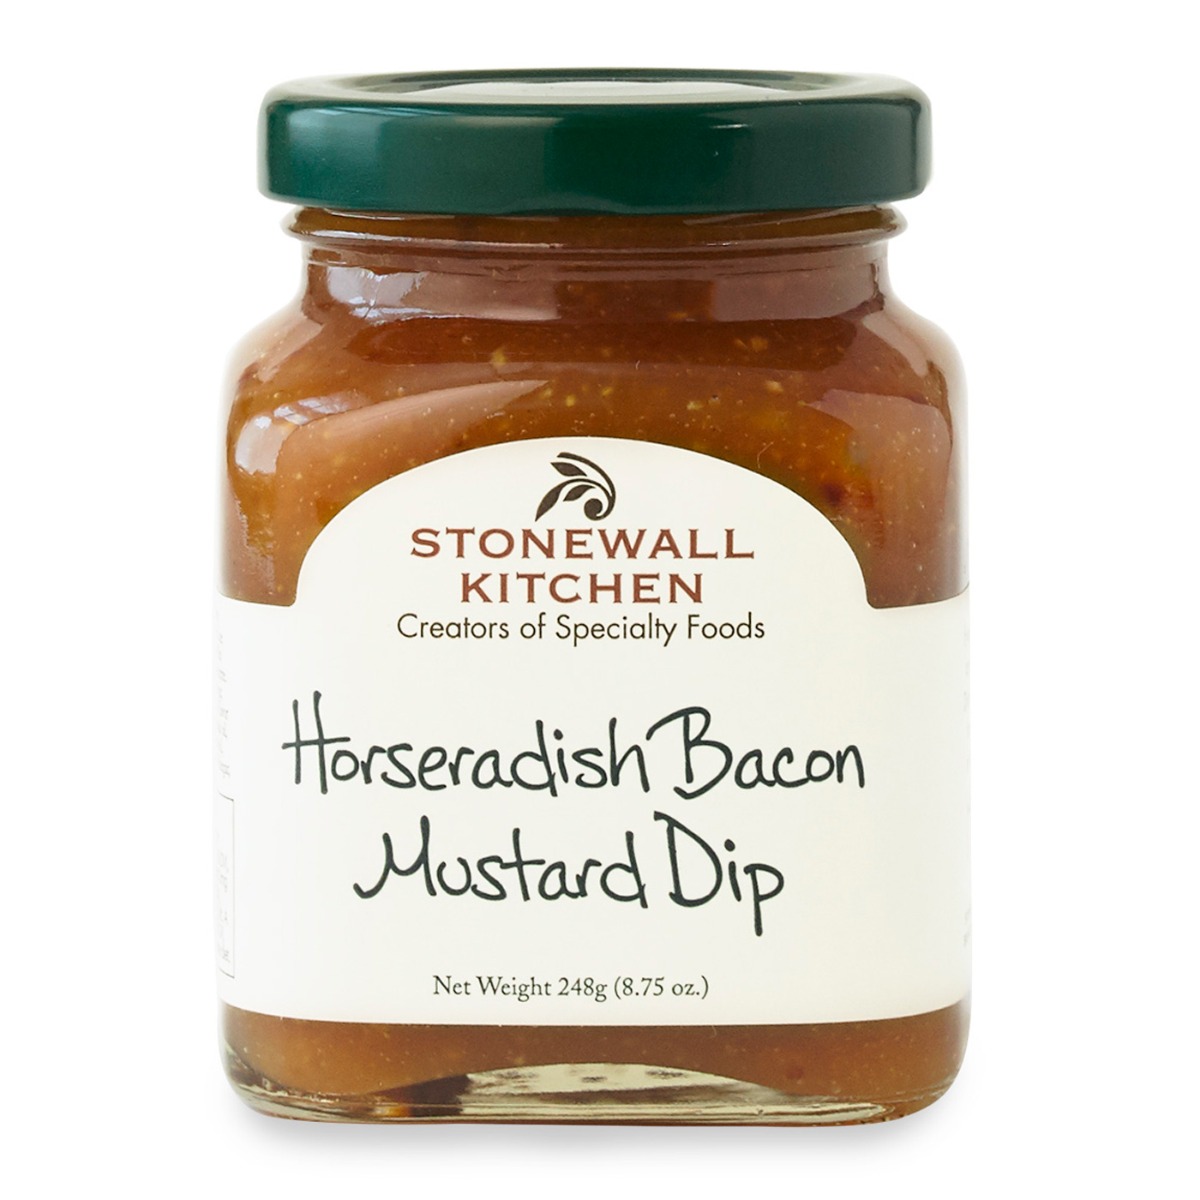 STONEWALL KITCHEN: Horseradish Bacon Mustard Dip, 8.75 oz - 0711381325582